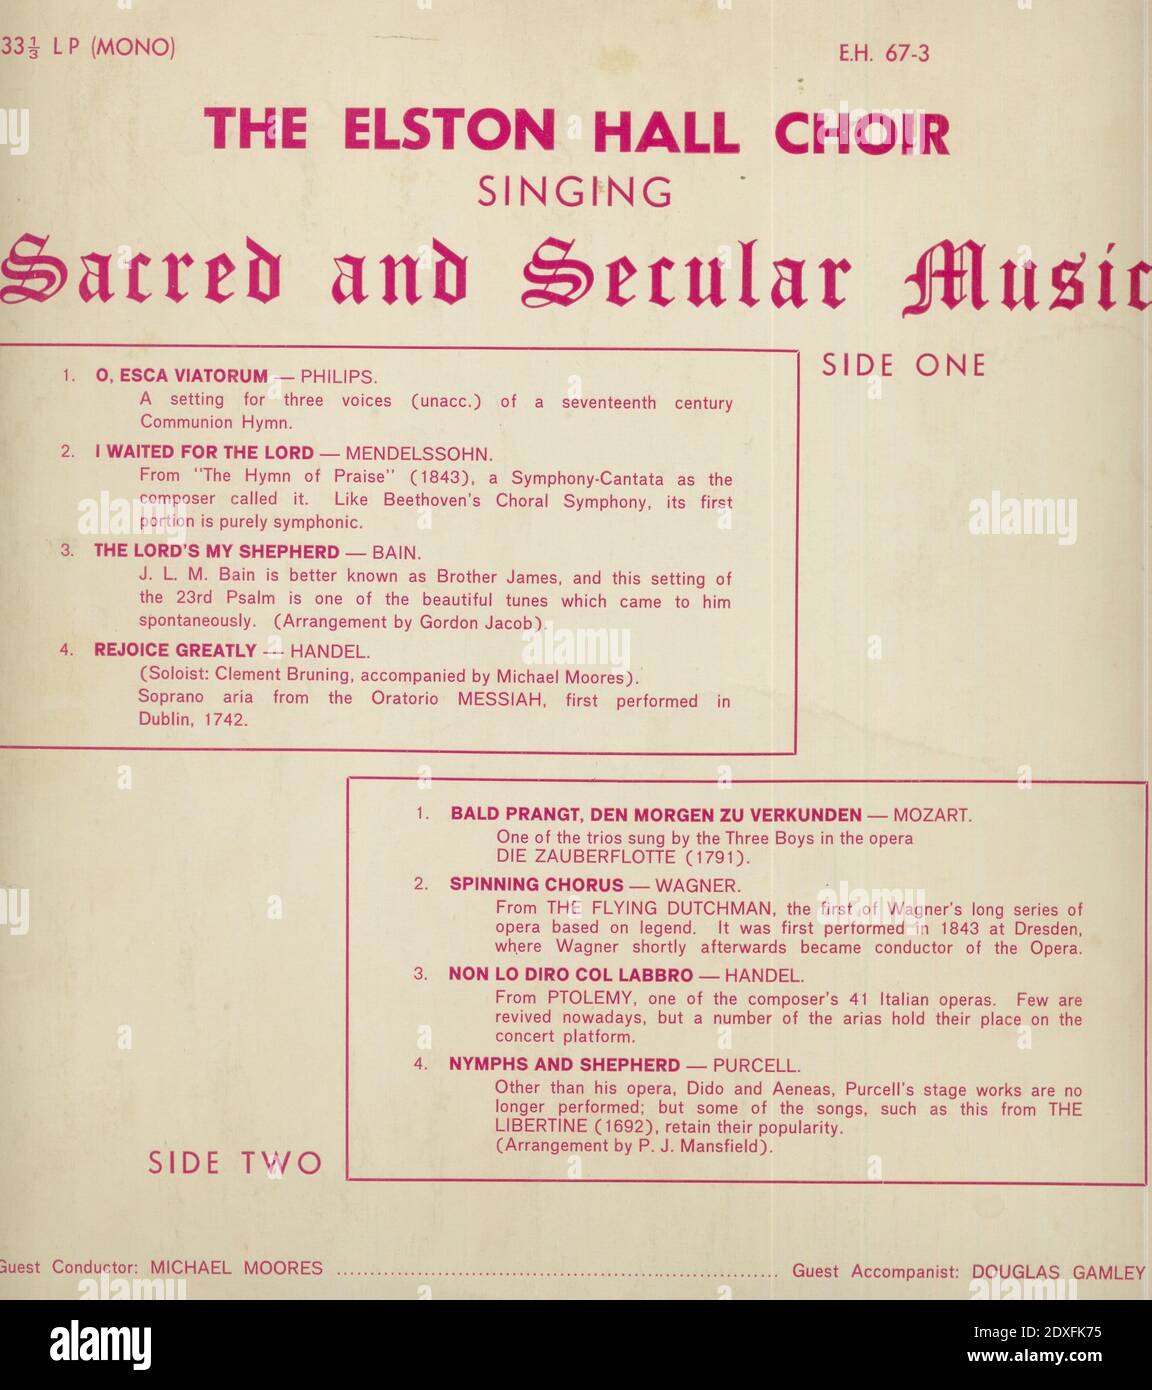 Elston Hall Choir singing Sacred and Secular Music Stock Photo